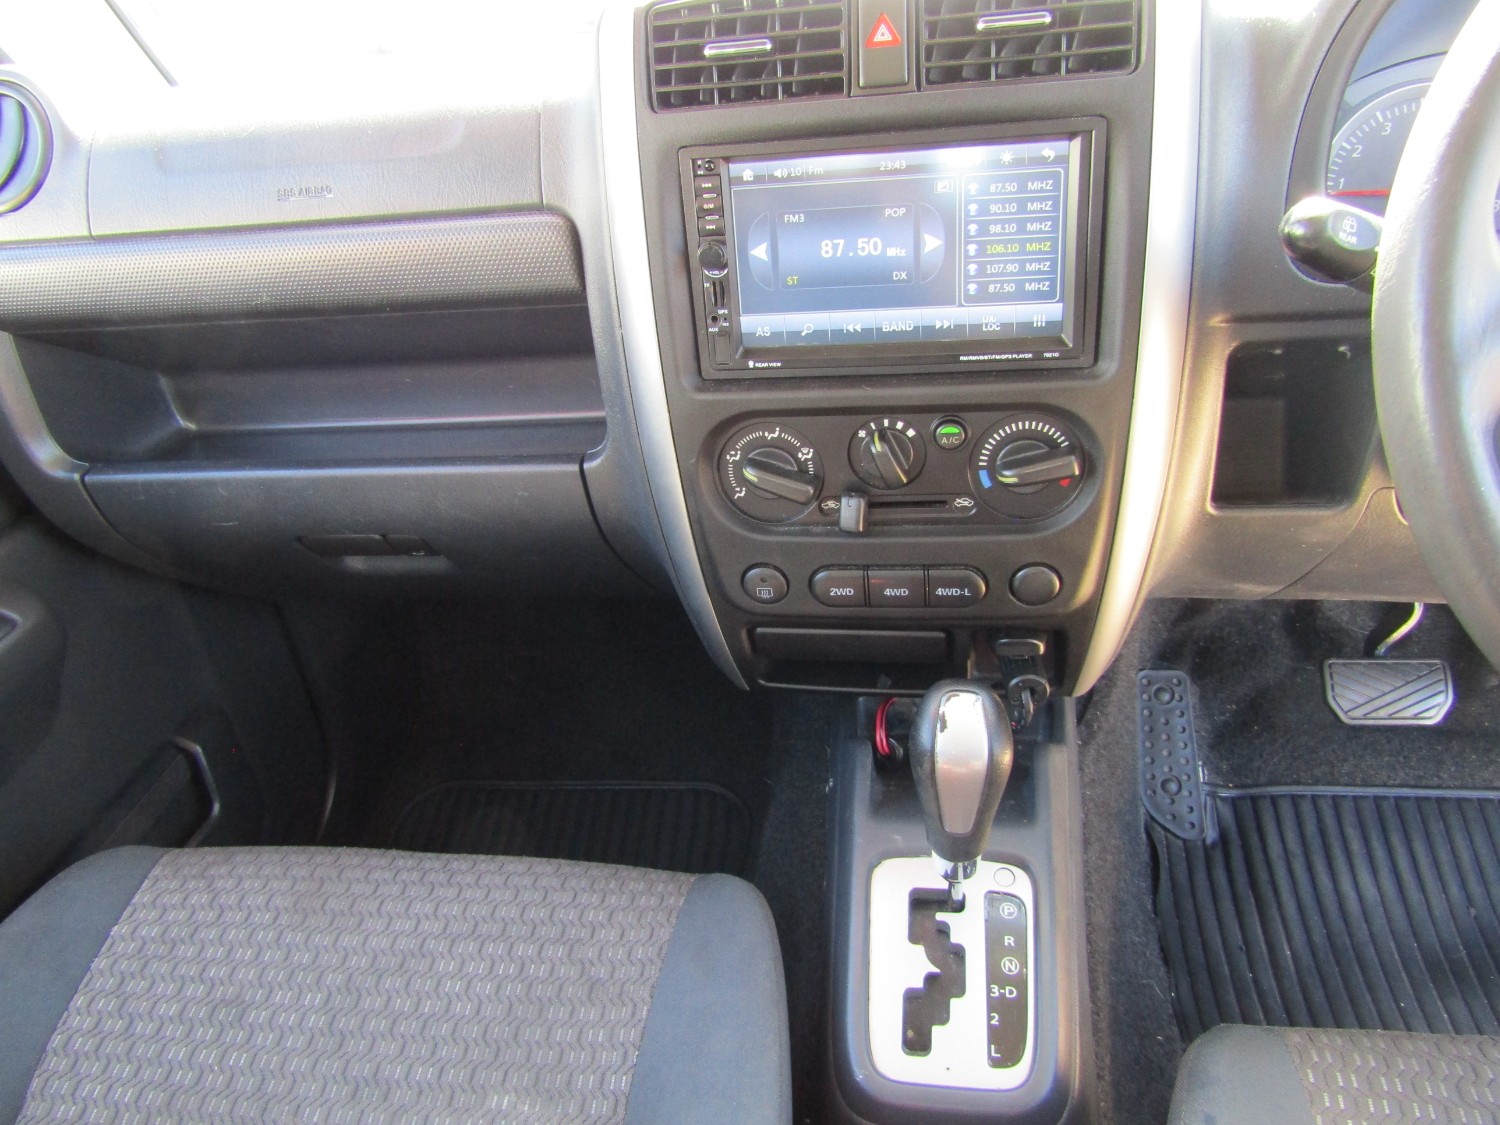 2011 Suzuki Jimny SUV Image 25